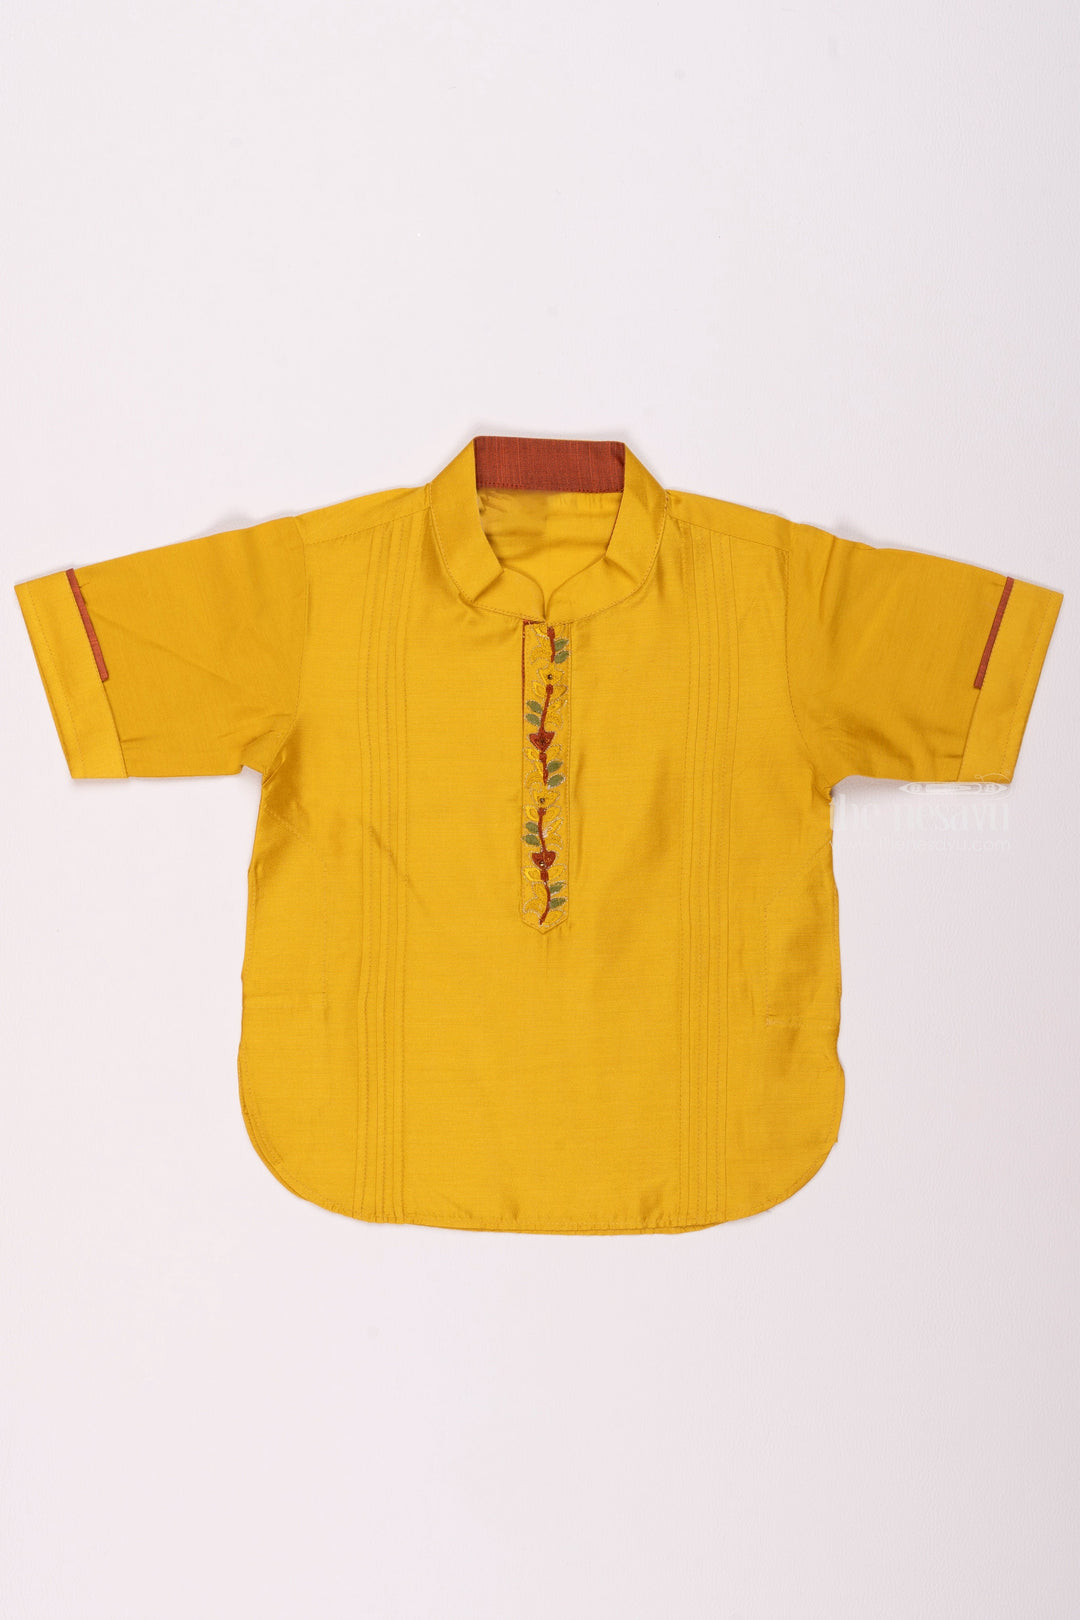 The Nesavu Boys Kurtha Shirt Matching Daddy and Son Shirts - Sunshine Bloom Vibrant Yellow Boys Shirt with Floral Embroidery Nesavu 12 (3M) / Yellow / Dupioni Silk BS092A-12 Cute Sibling Kurta Shirts | Trendy Designs for Brothers Combo Shirt | The Nesavu